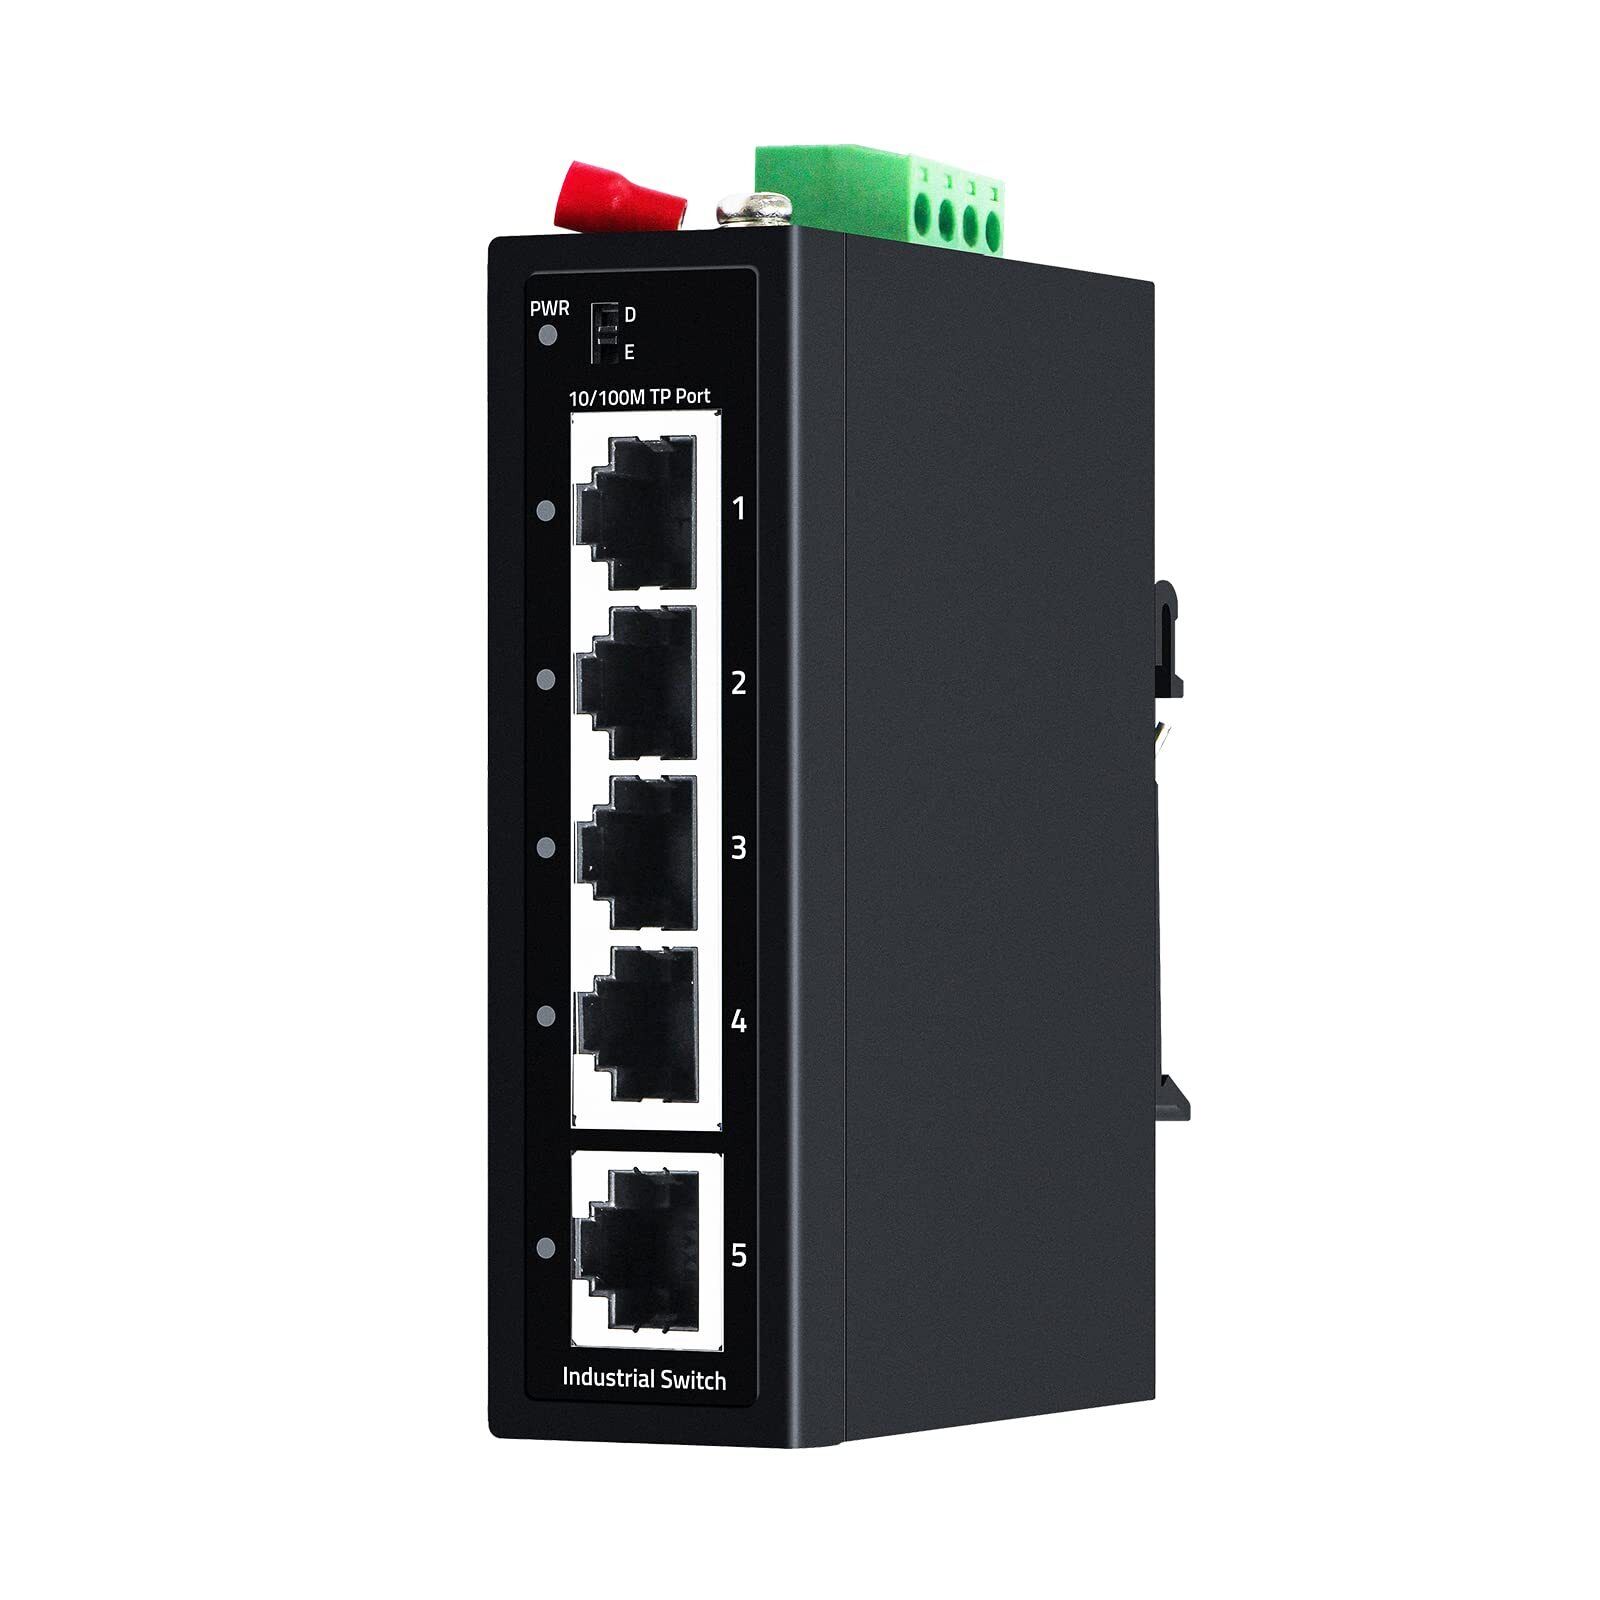 【Upgrade】 SODOLA 5 Port Industrial DIN-Rail Ethernet Switch,4 Ports and 1 Upl...